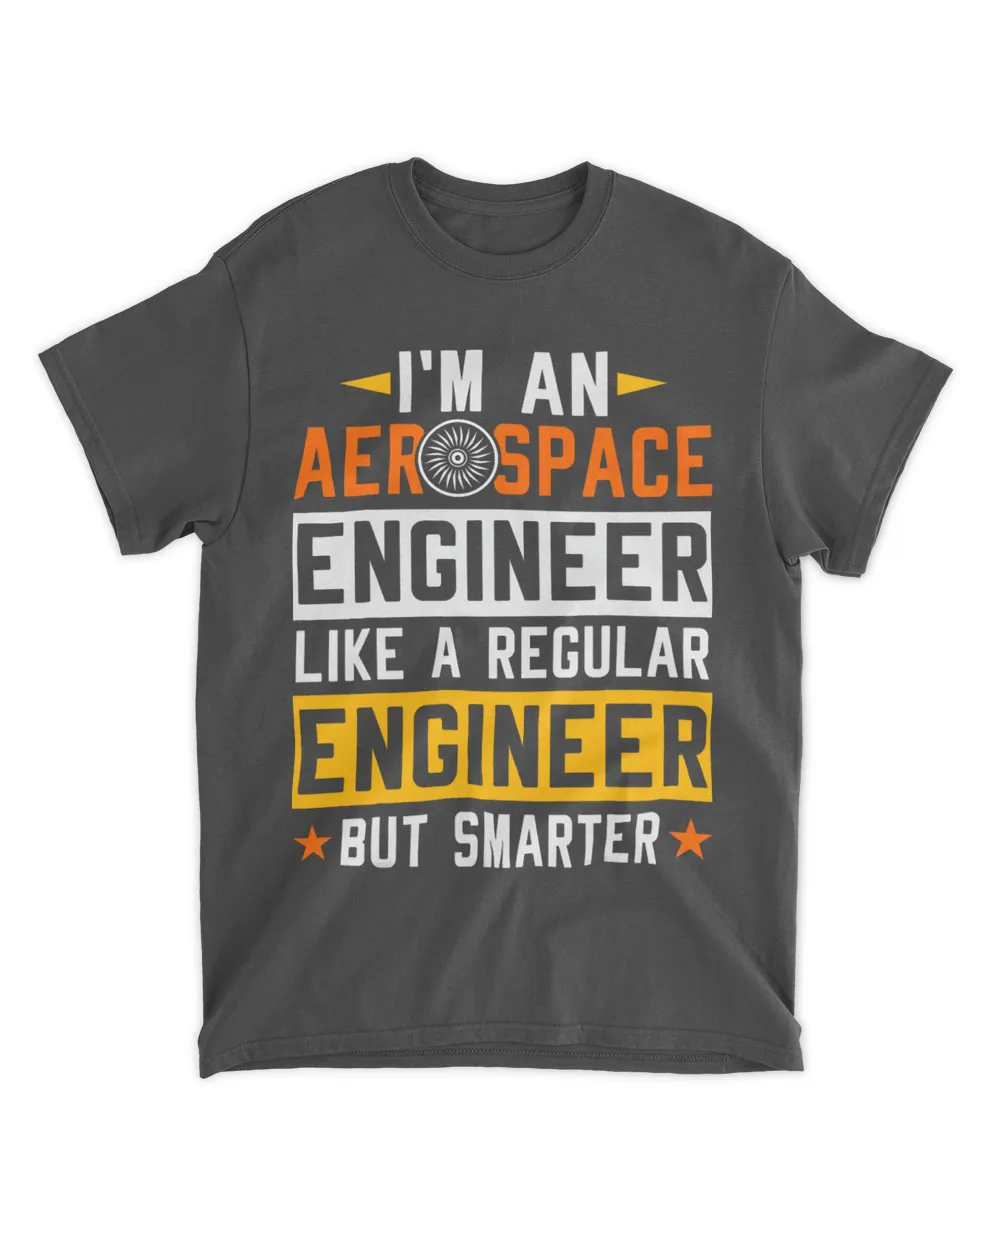 Aerospace engineer Design for a Rocket scientist